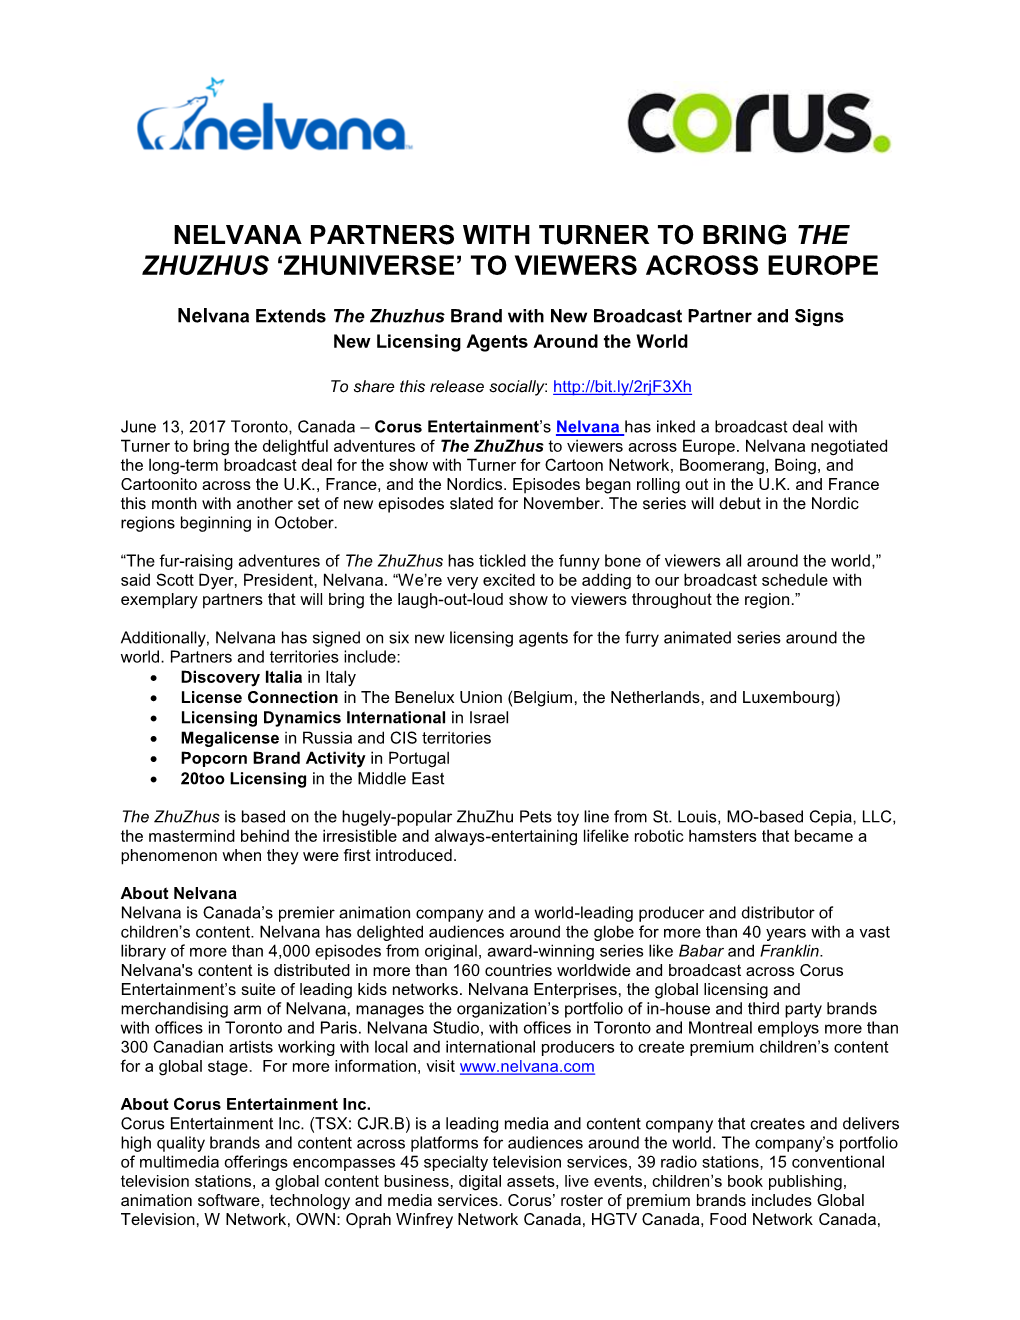 Nelvana Partners with Turner to Bring the Zhuzhus ‘Zhuniverse’ to Viewers Across Europe